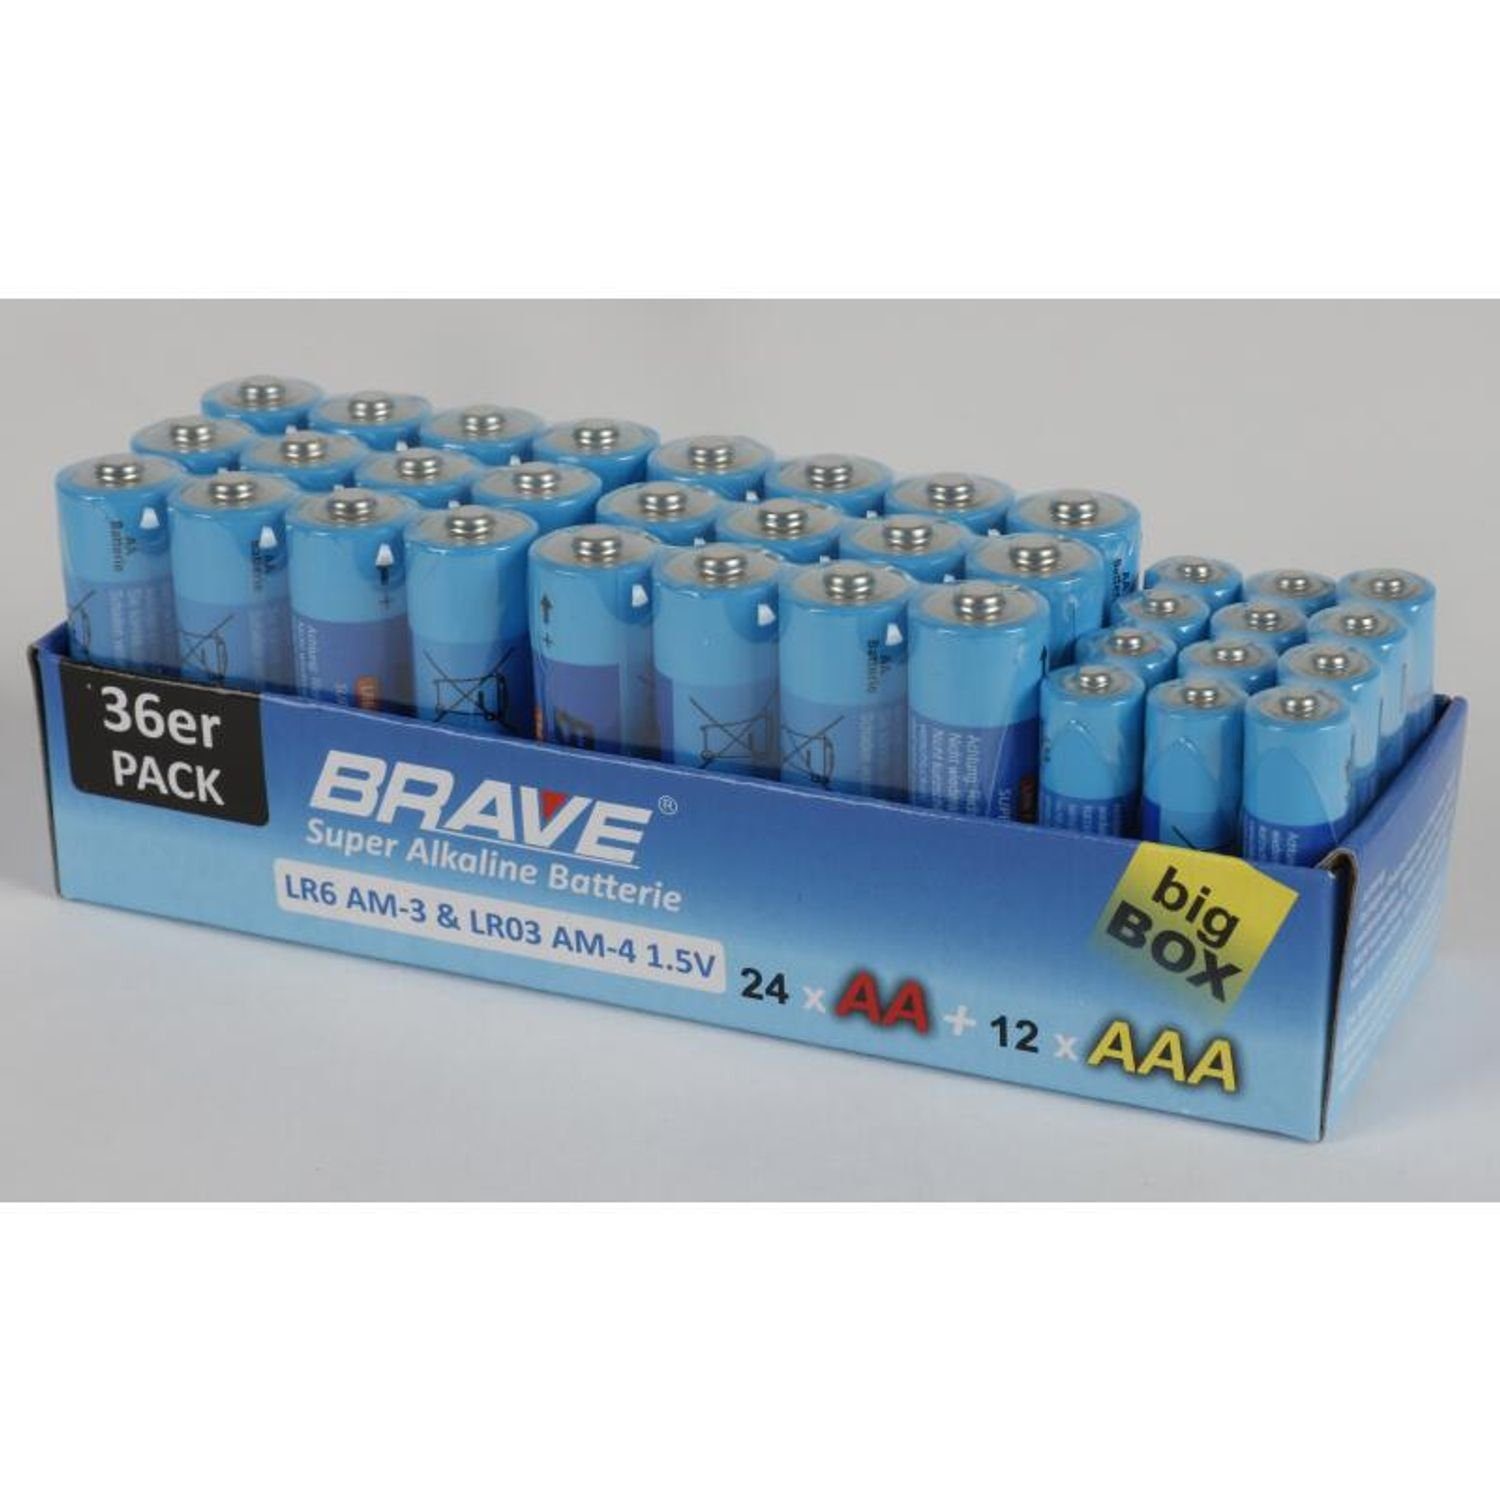 Batterie, Großpackung AAA 24x 36er-Packung Brave St) Alkaline Batterien BURI (864 AA &